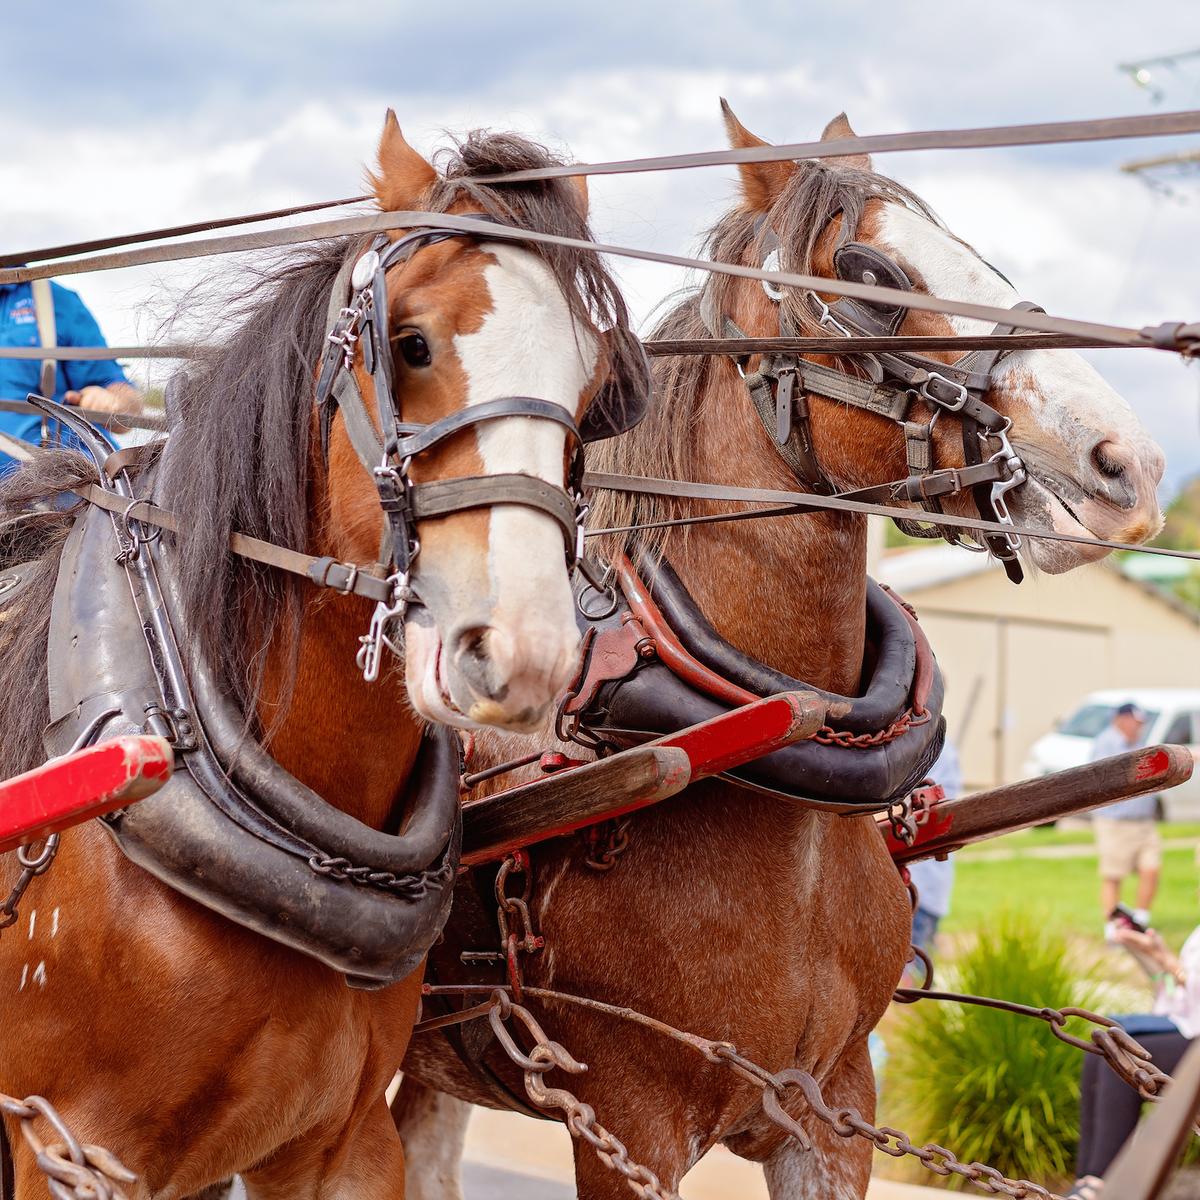 Australian draft horses in a street festival. (Jackson Stock Photography/Shutterstock)